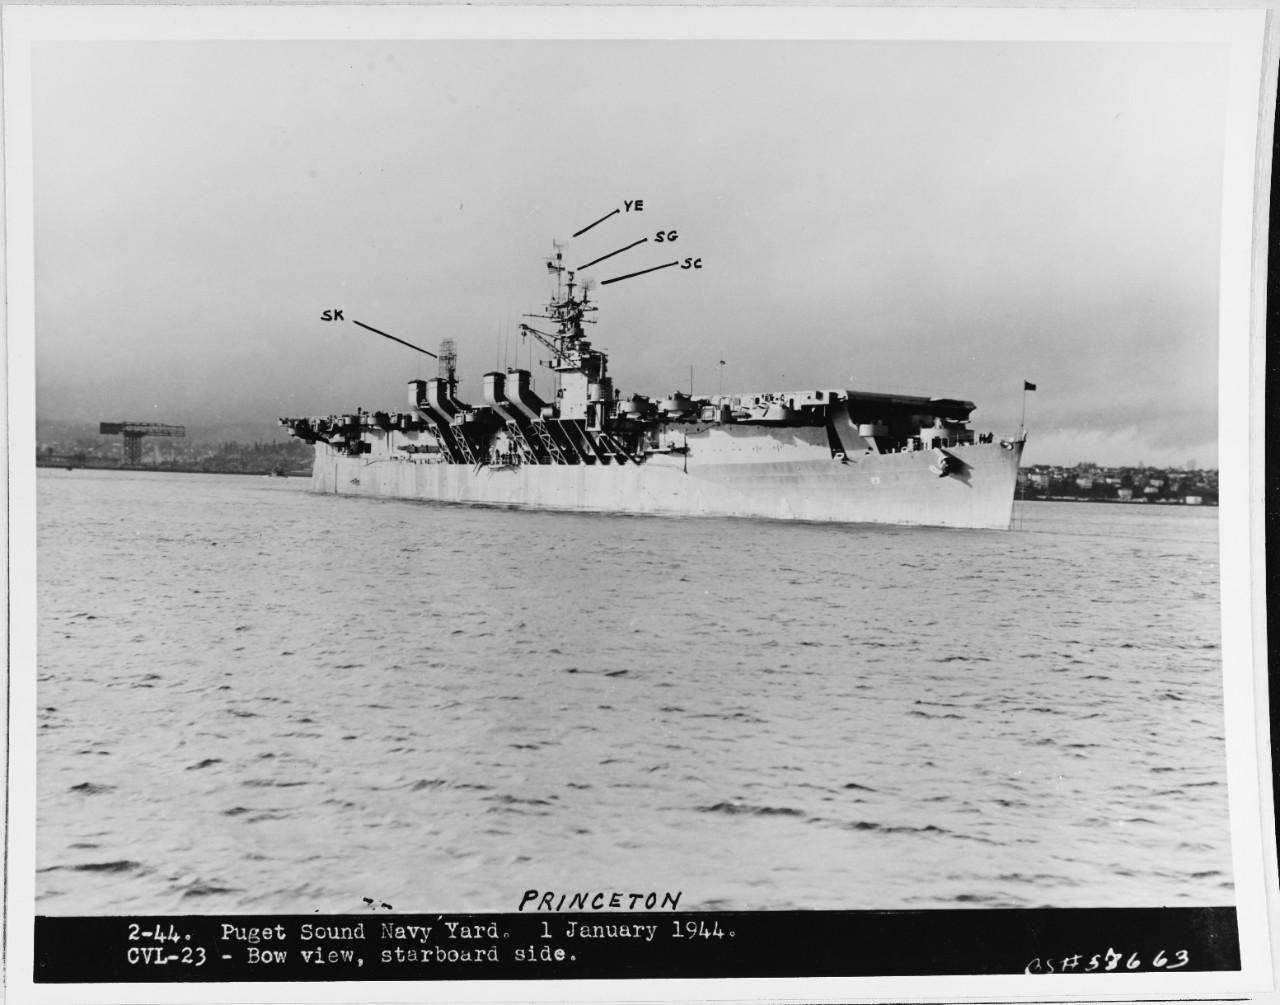 USS PRINCETON (CVL-23)